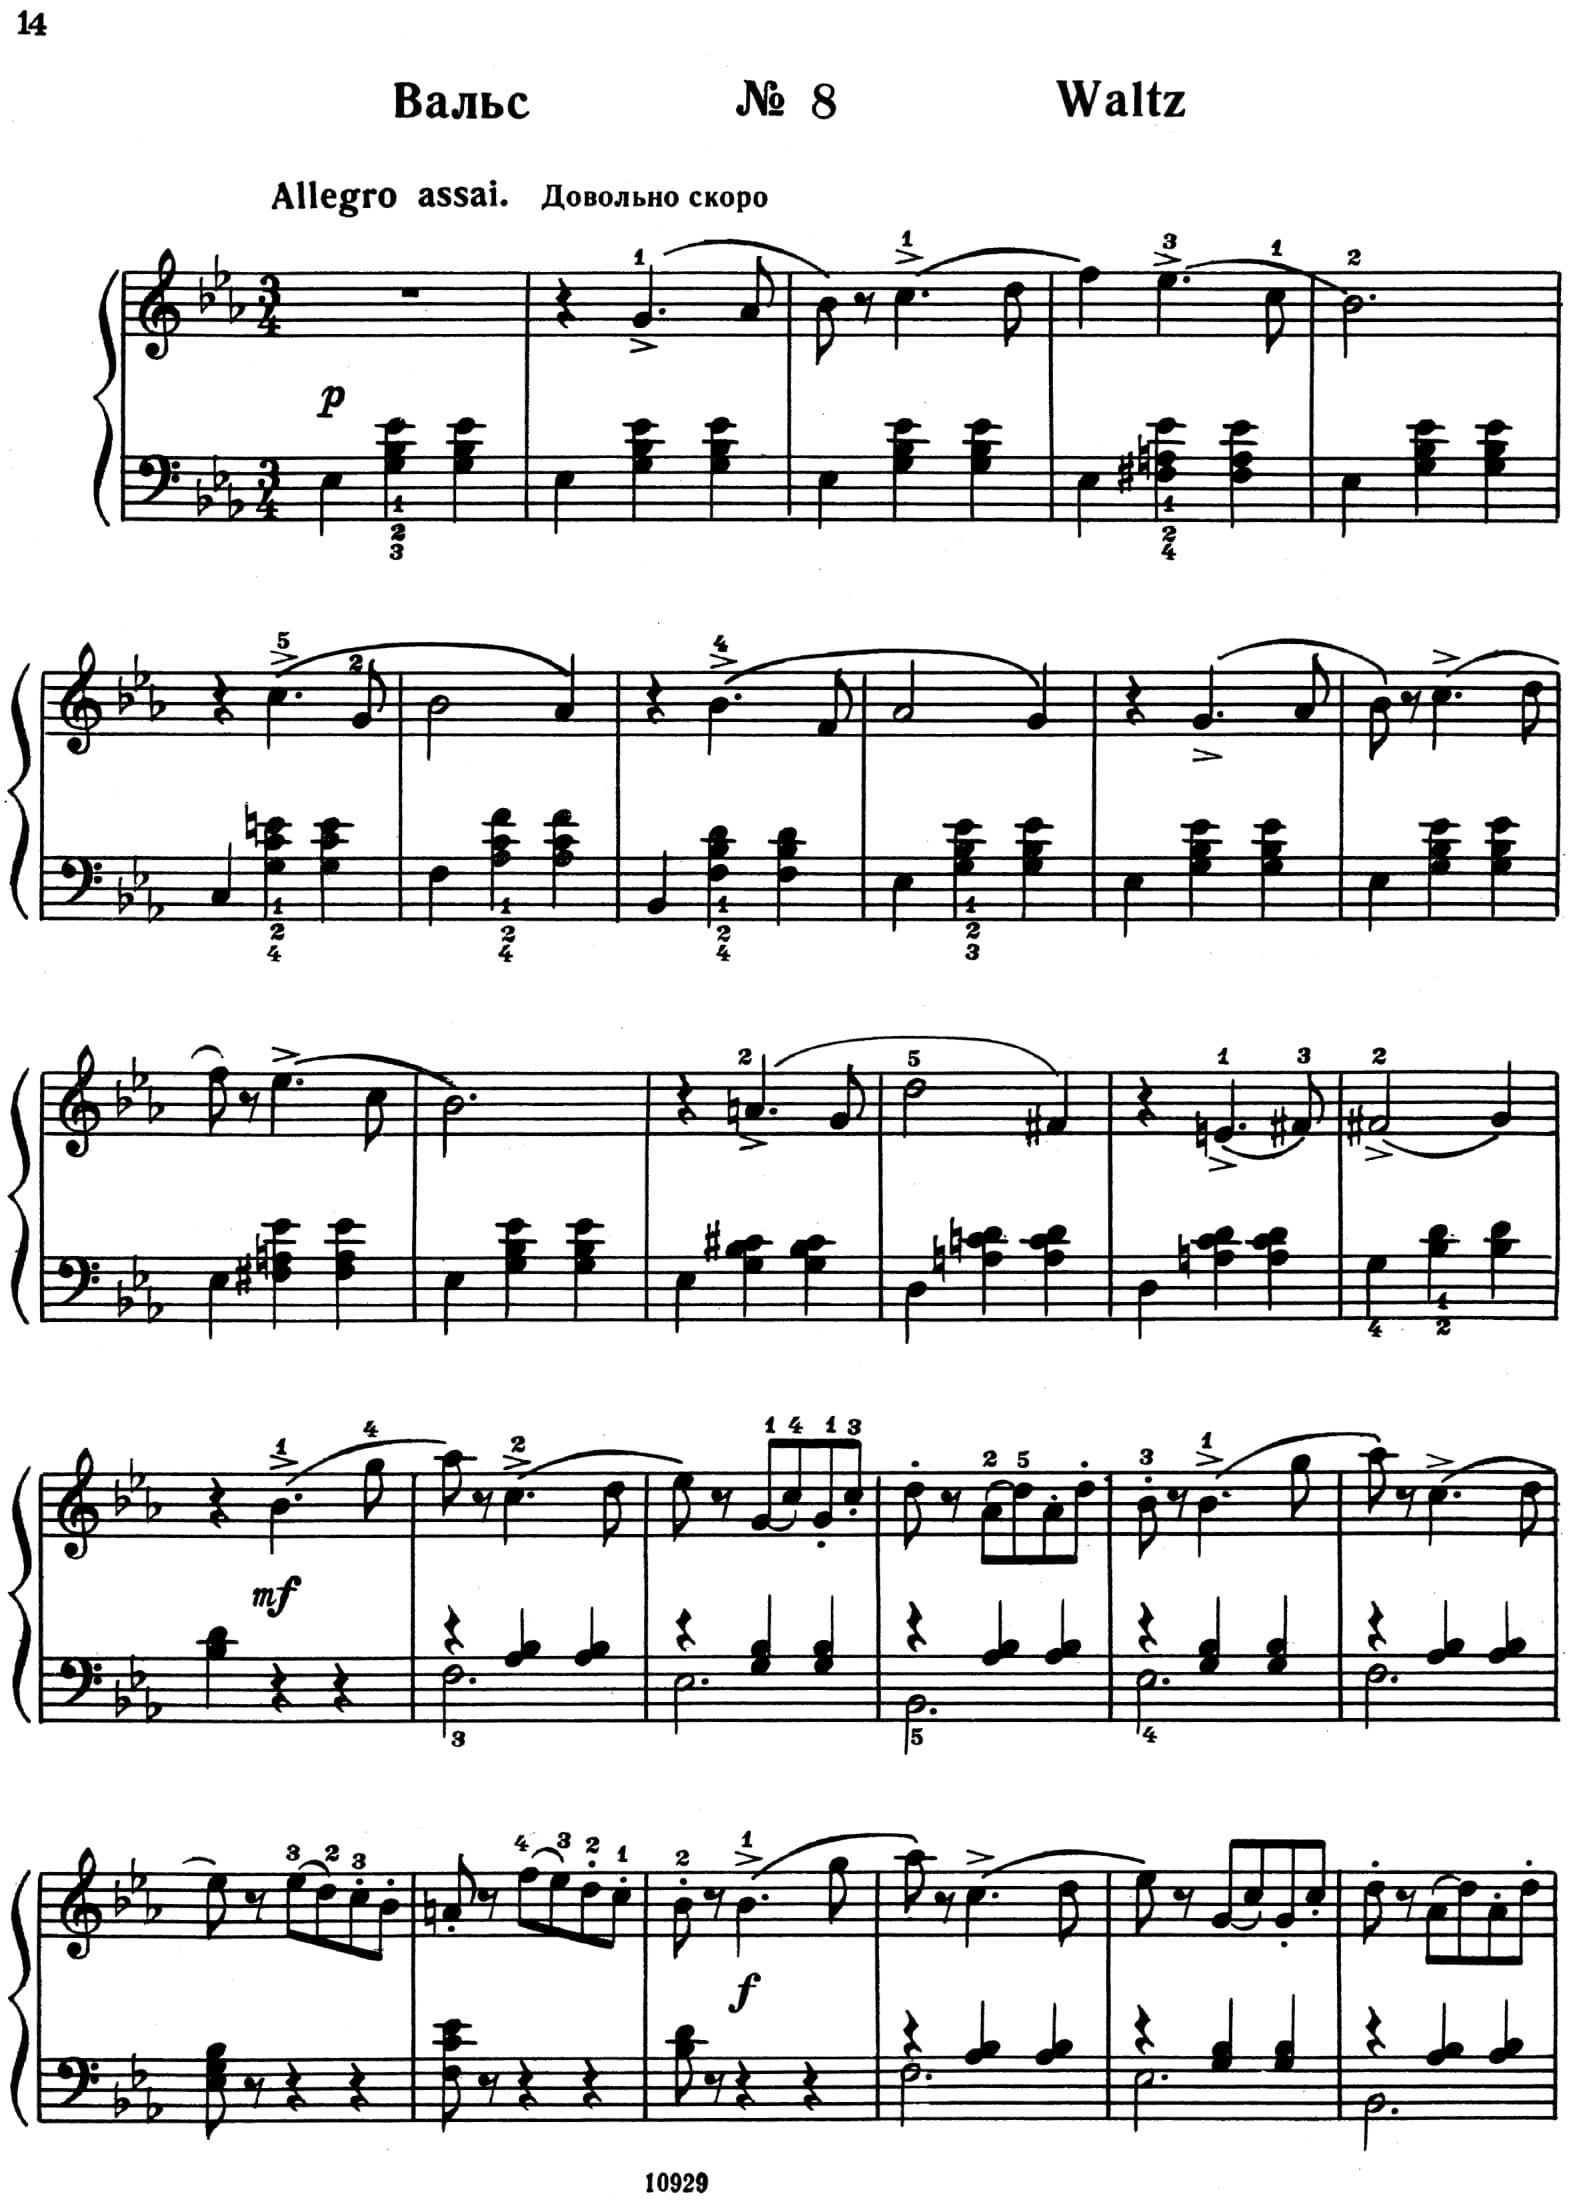 PIANO]Peter Ilyich Tchaikovsky : Valse Op.39, No. 8[Free Sheet Musci]